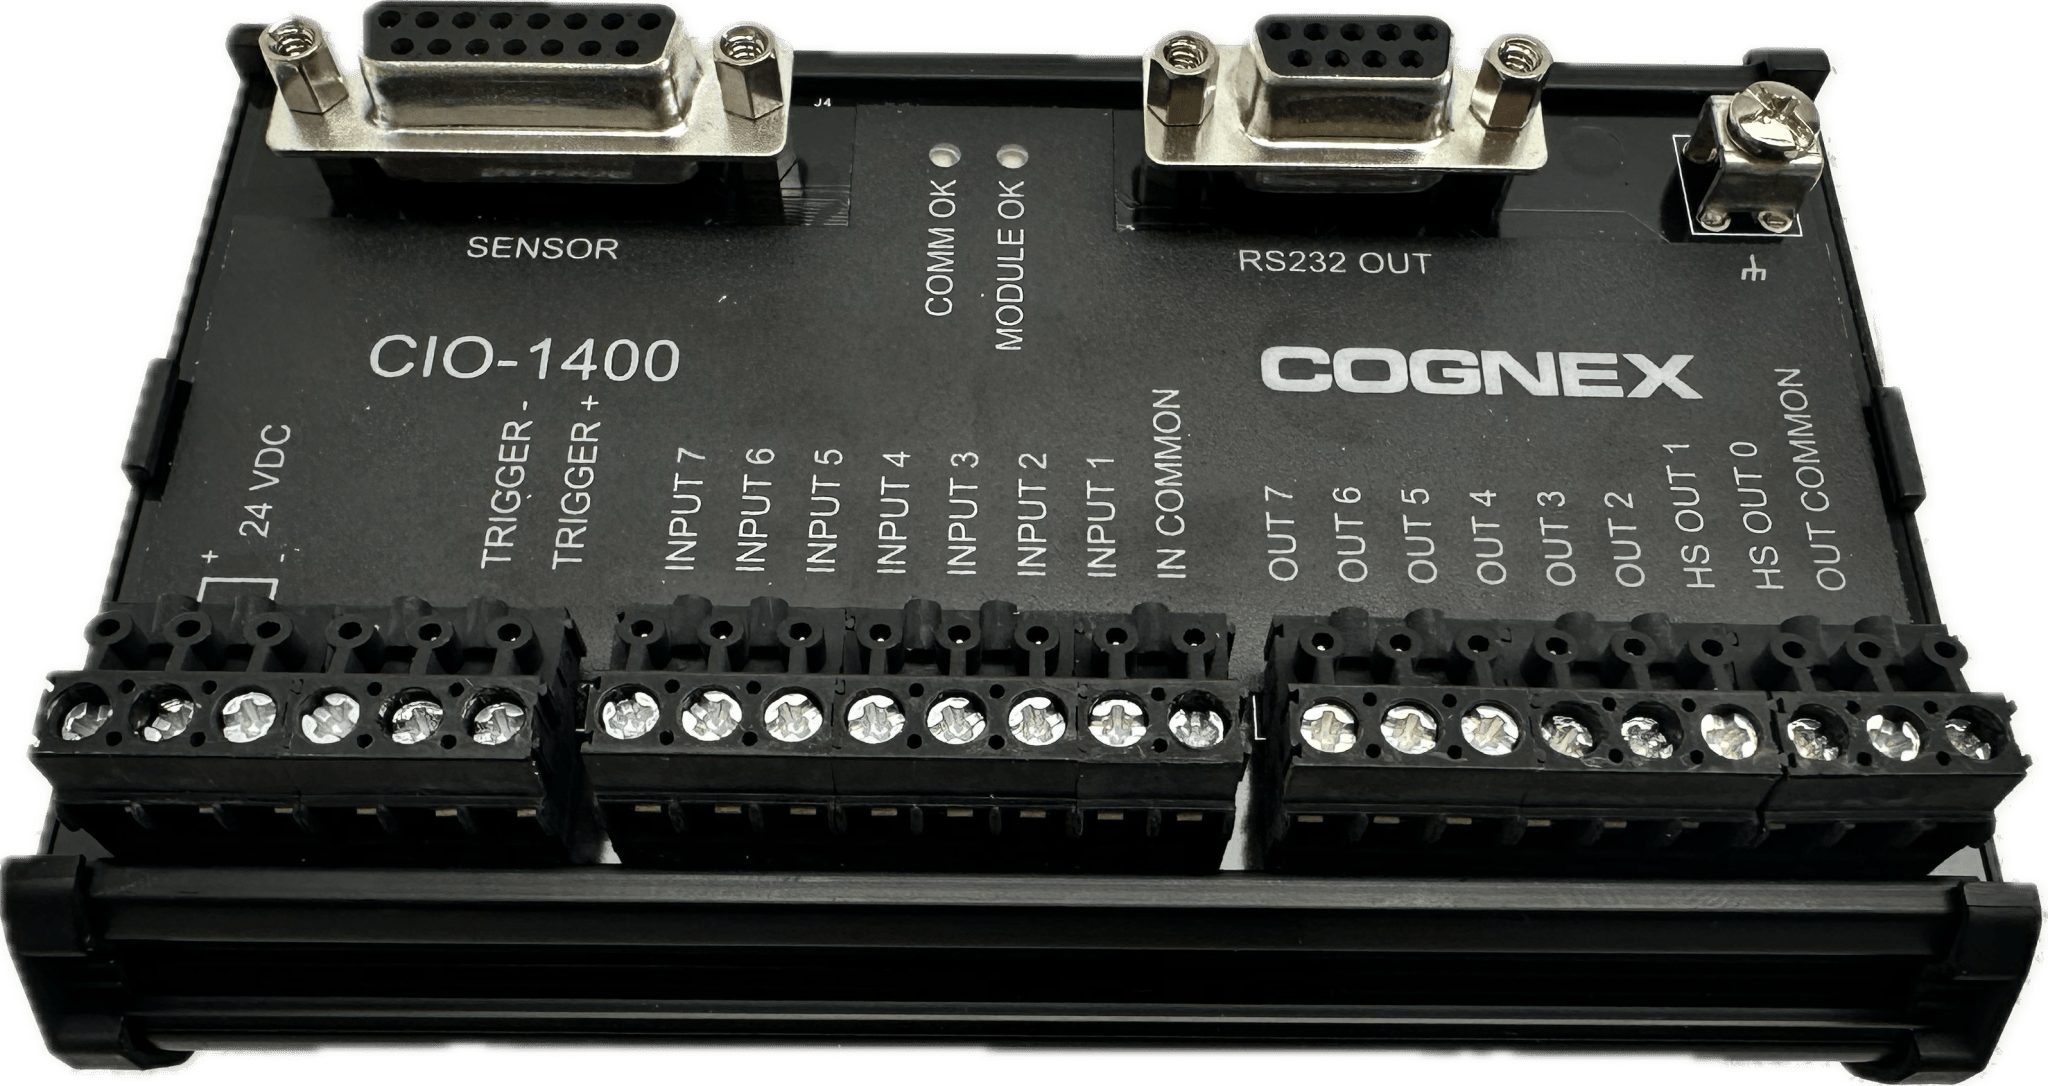 Cognex CIO-1400 I/O Expansion Module - #product_category# | Klenk Maschinenhandel